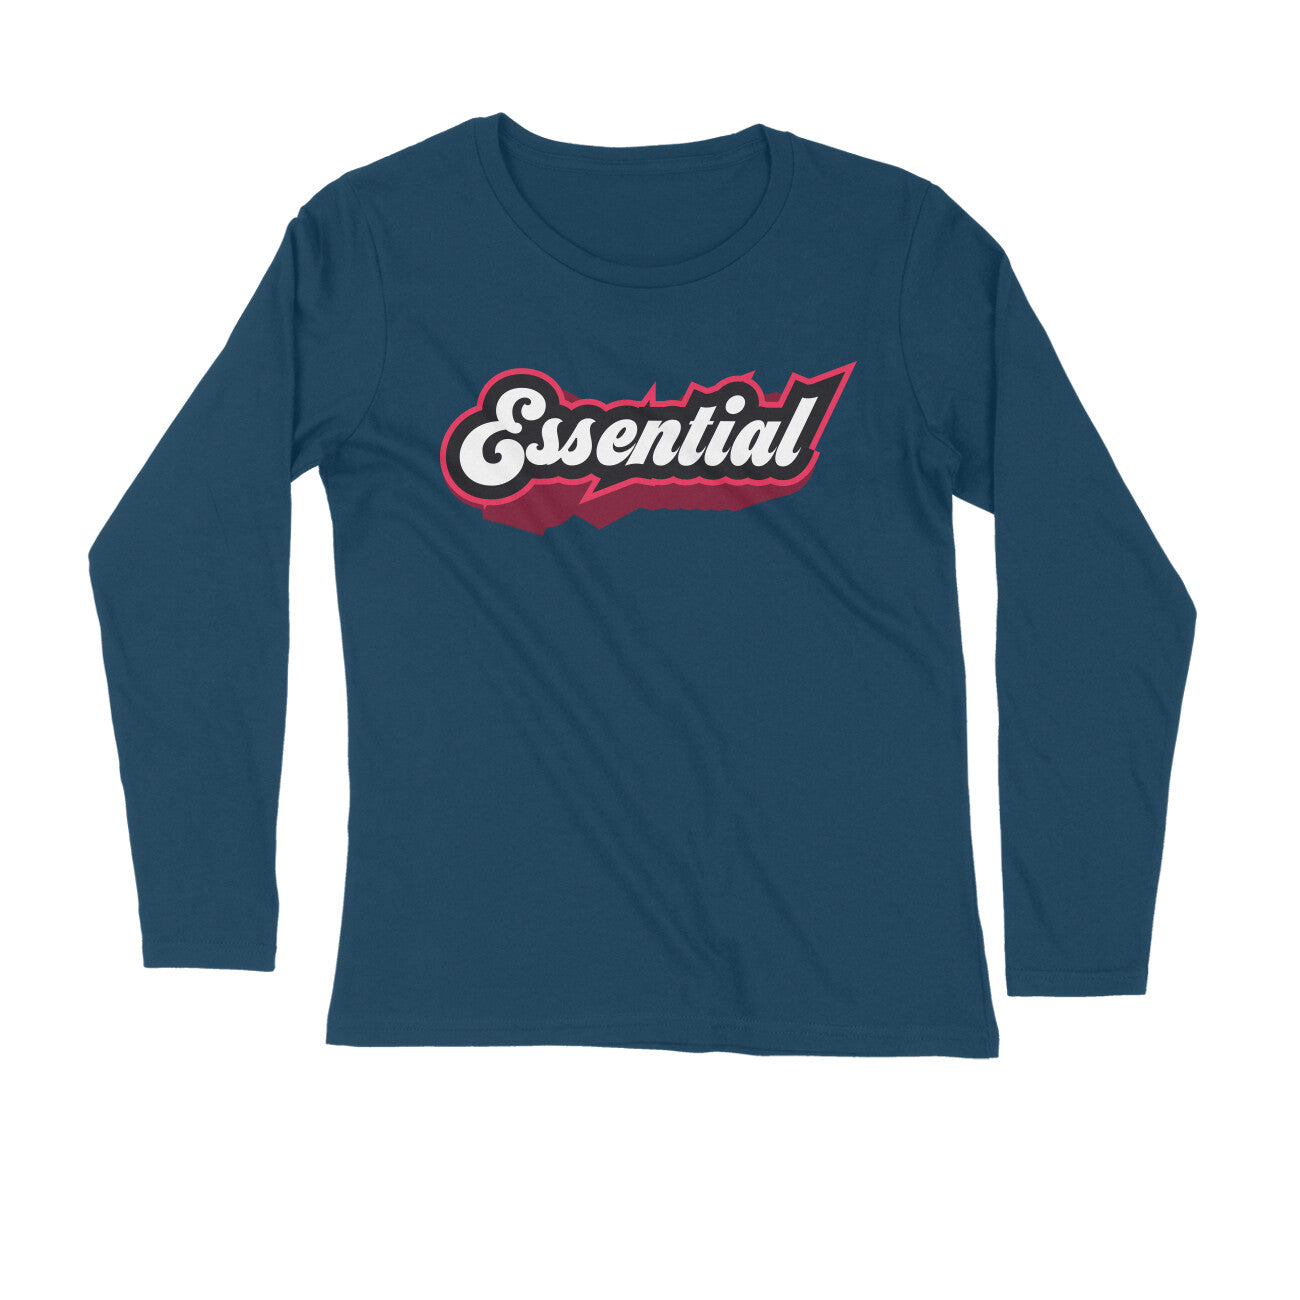 Essential Full Sleeves Printed T-Shirt